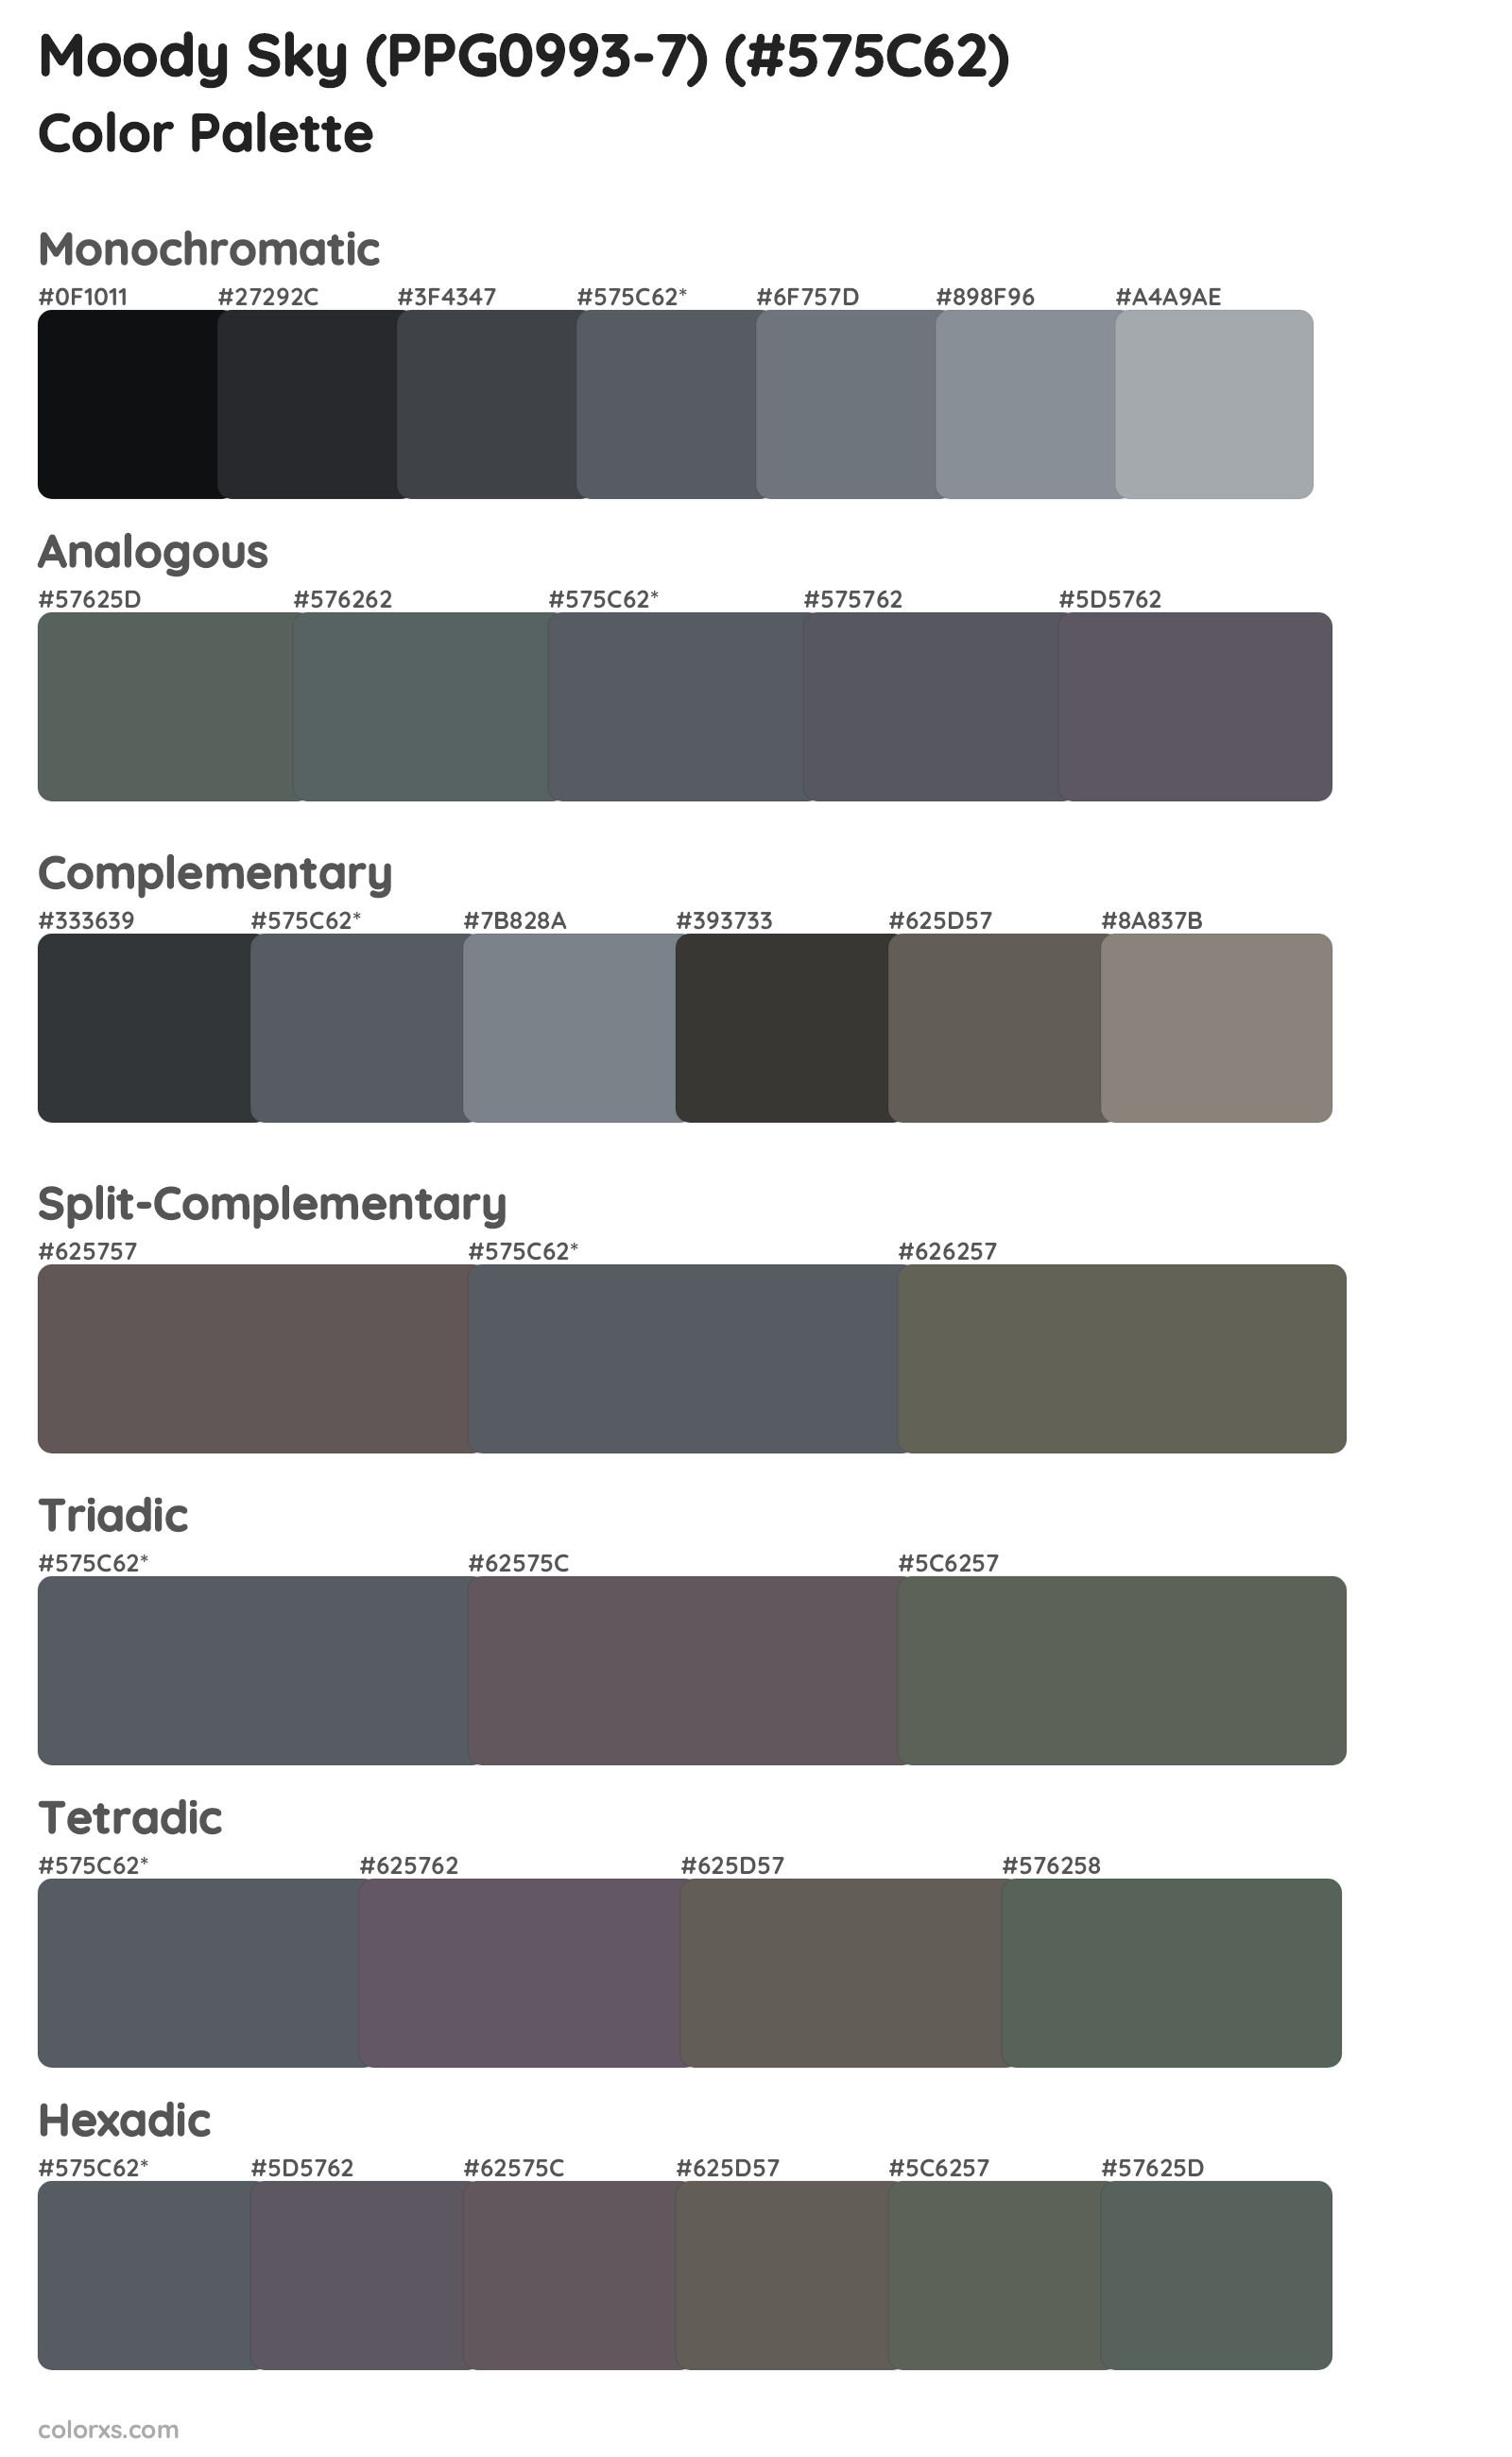 Moody Sky (PPG0993-7) Color Scheme Palettes